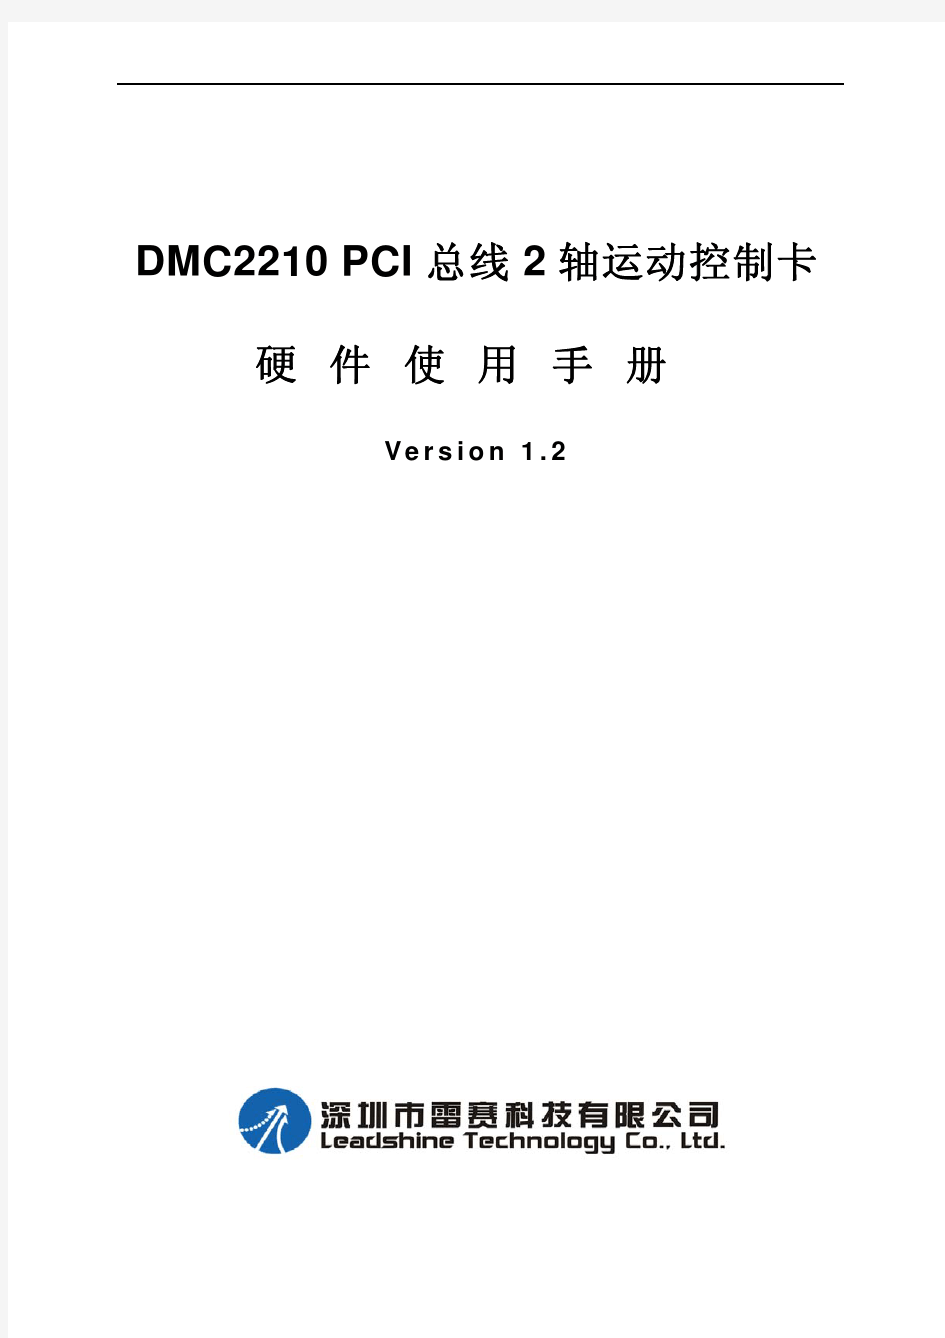 DMC2210硬件手册v1.2